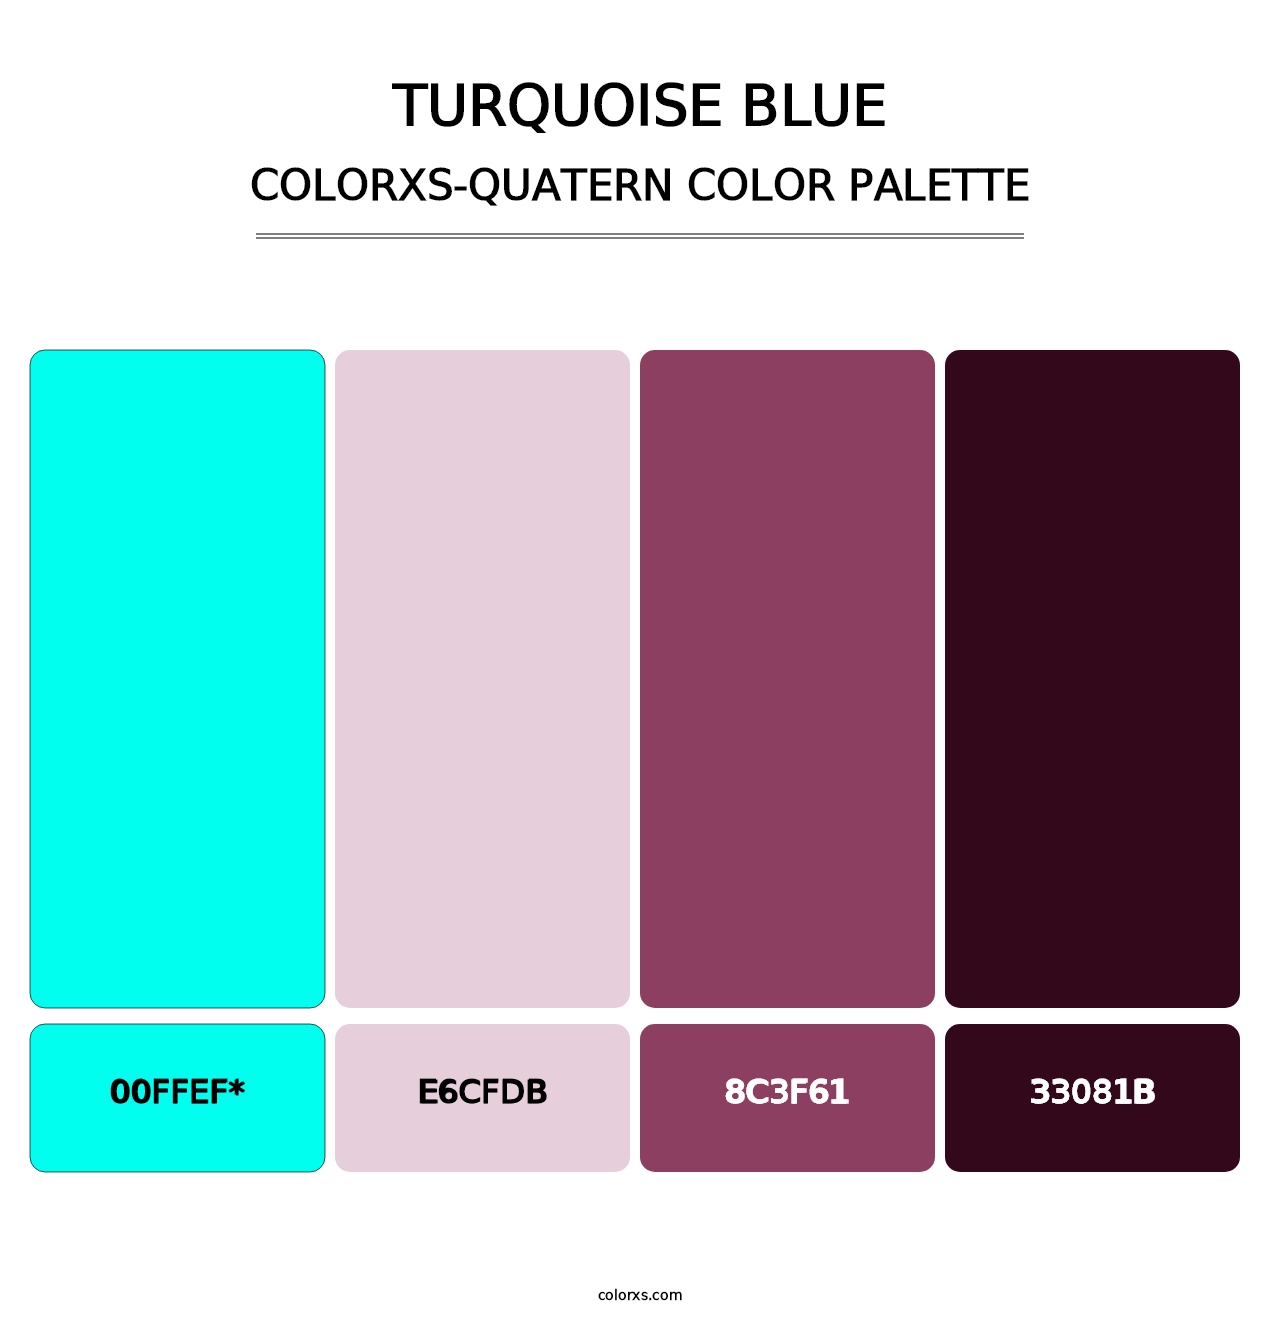 Turquoise Blue - Colorxs Quatern Palette